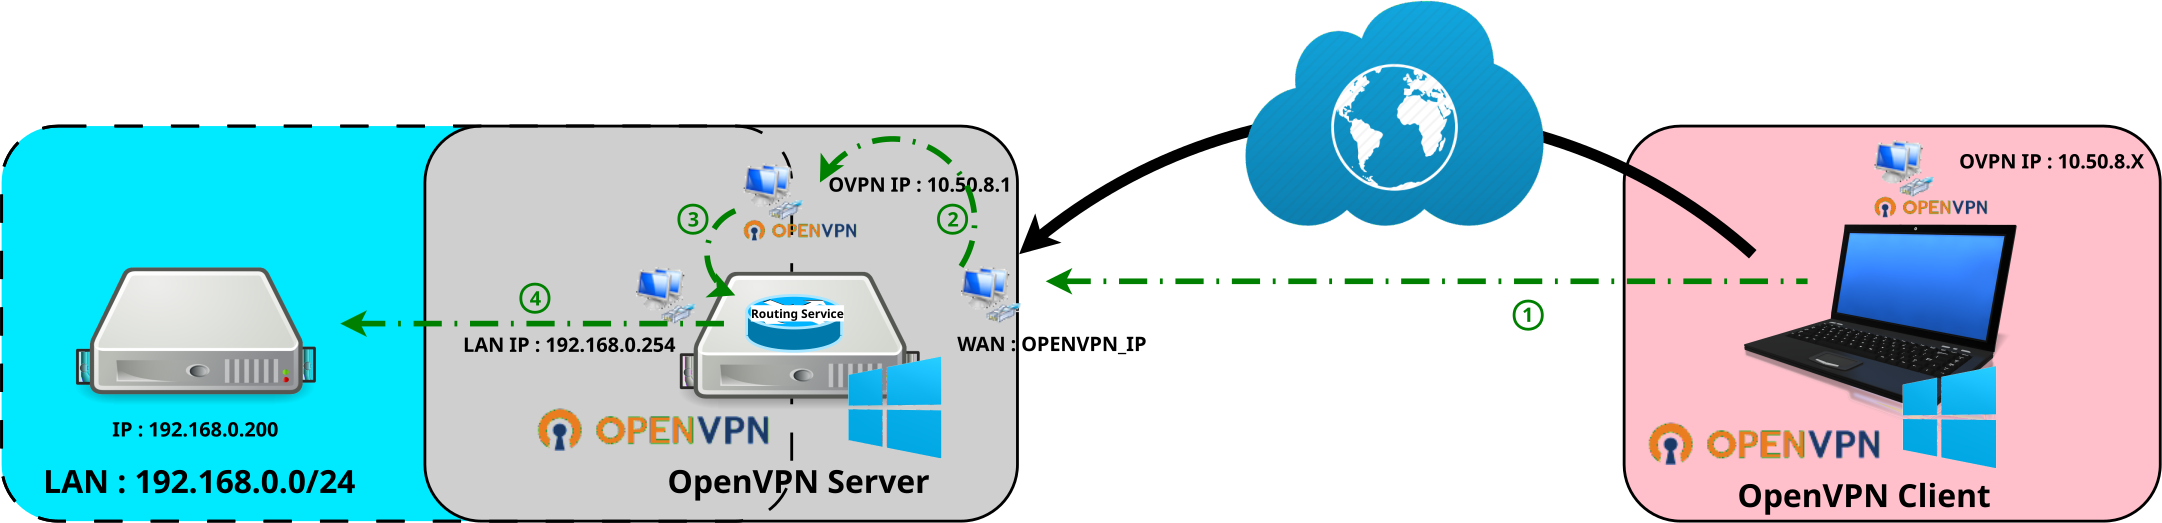 Windows OpenVPN with routing Network Scheme